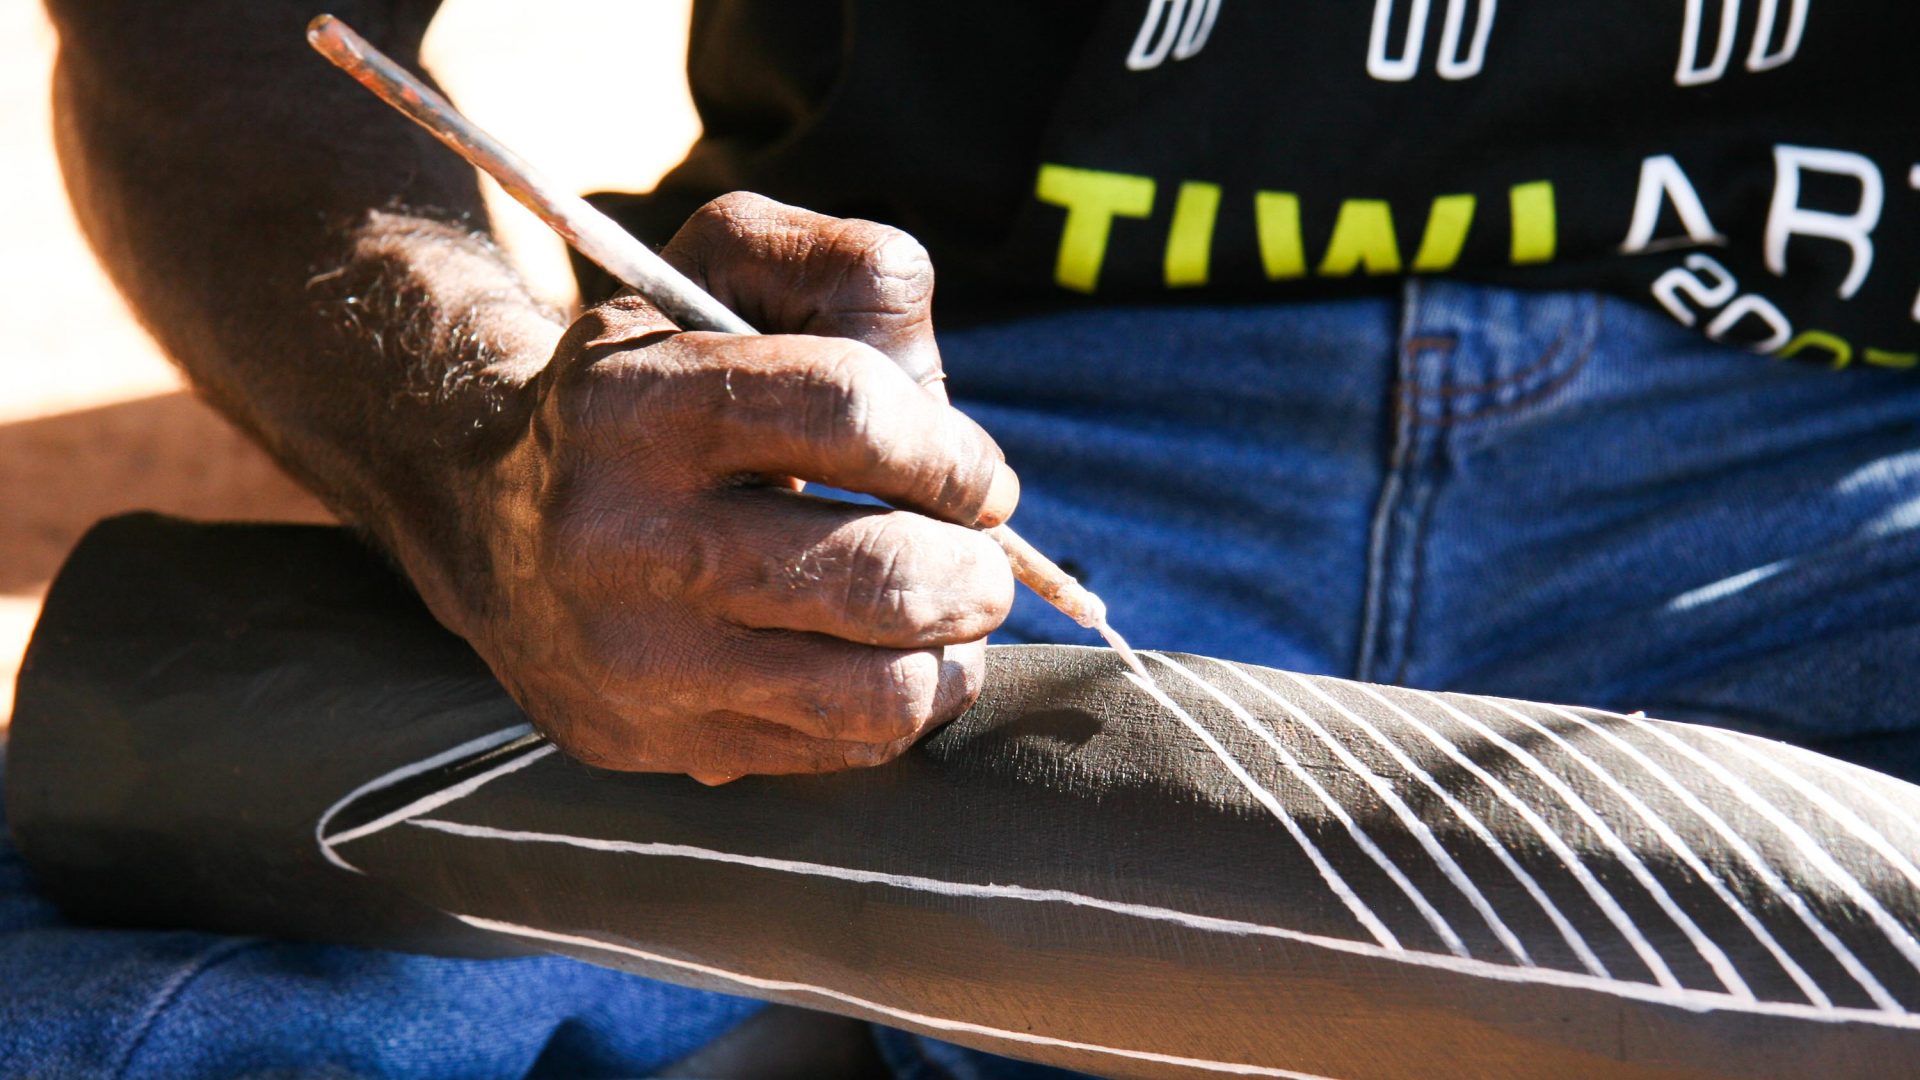 A man hands paints a cross hatch design.